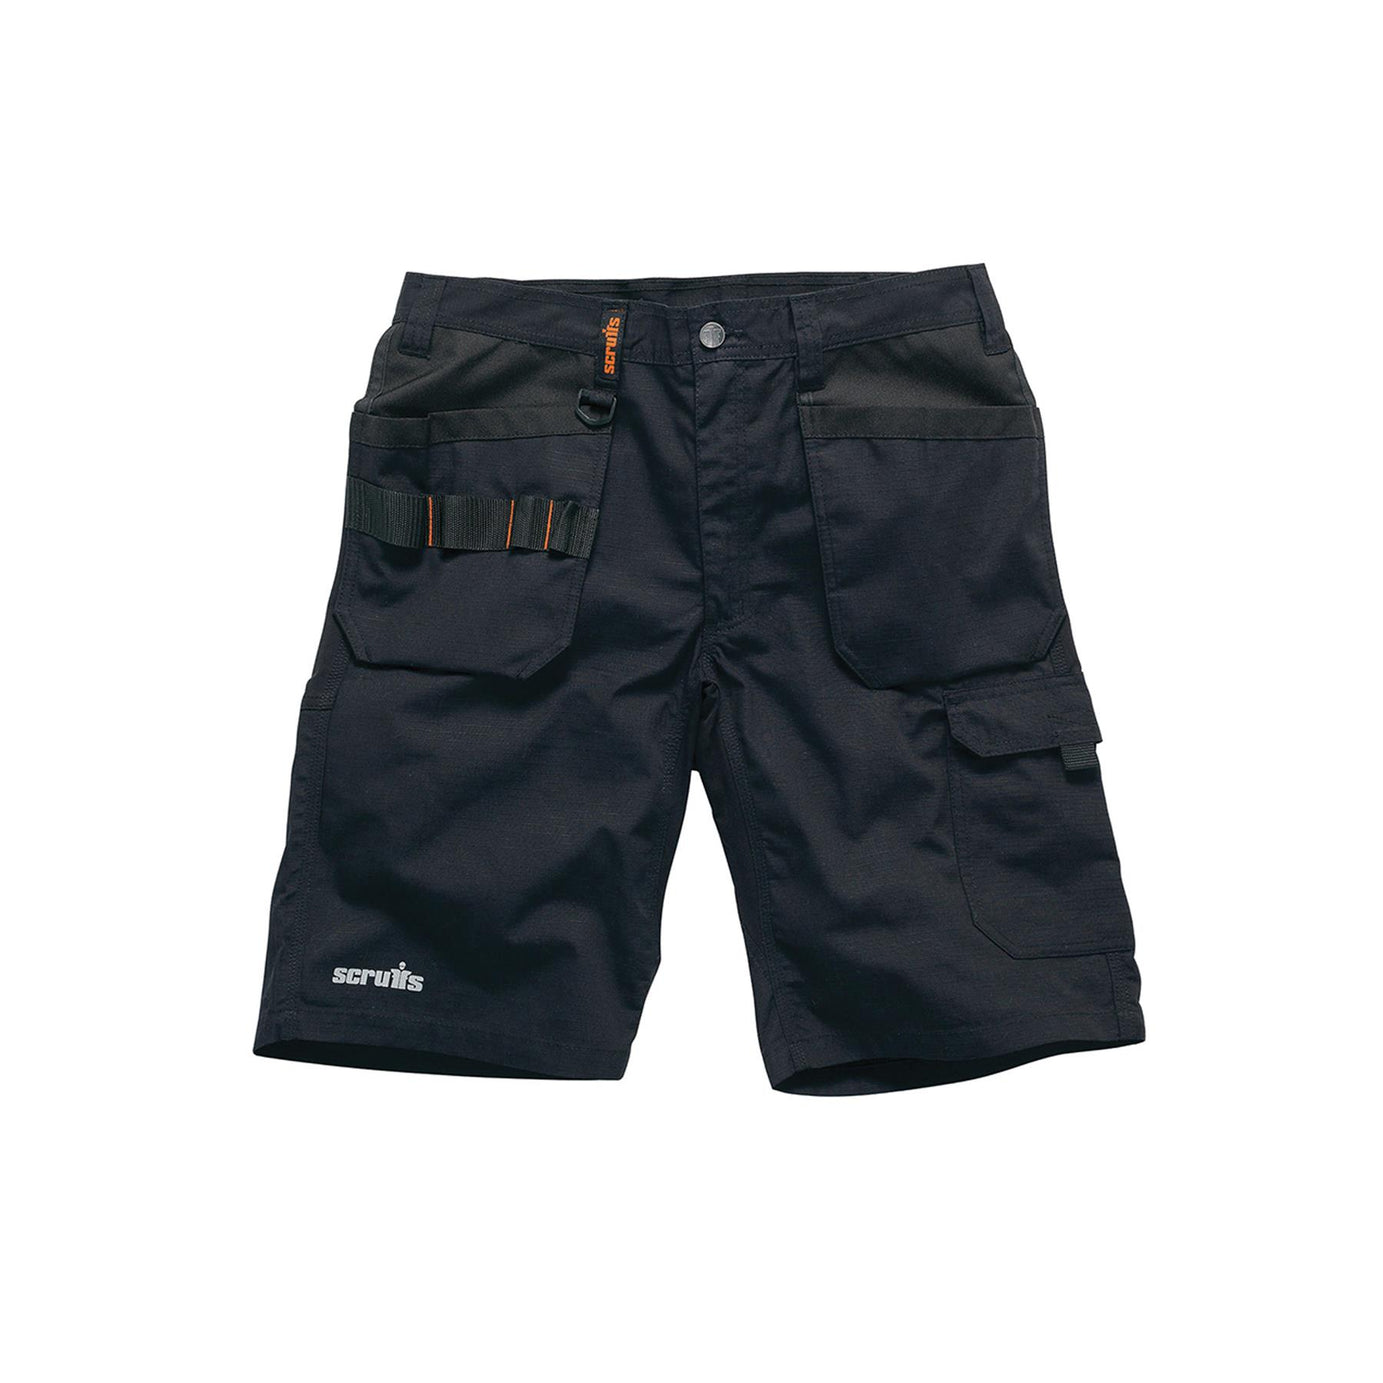 Scruffs Flex Holster Shorts Cargo Combat Pockets Hard Wearing Black 32 Waist